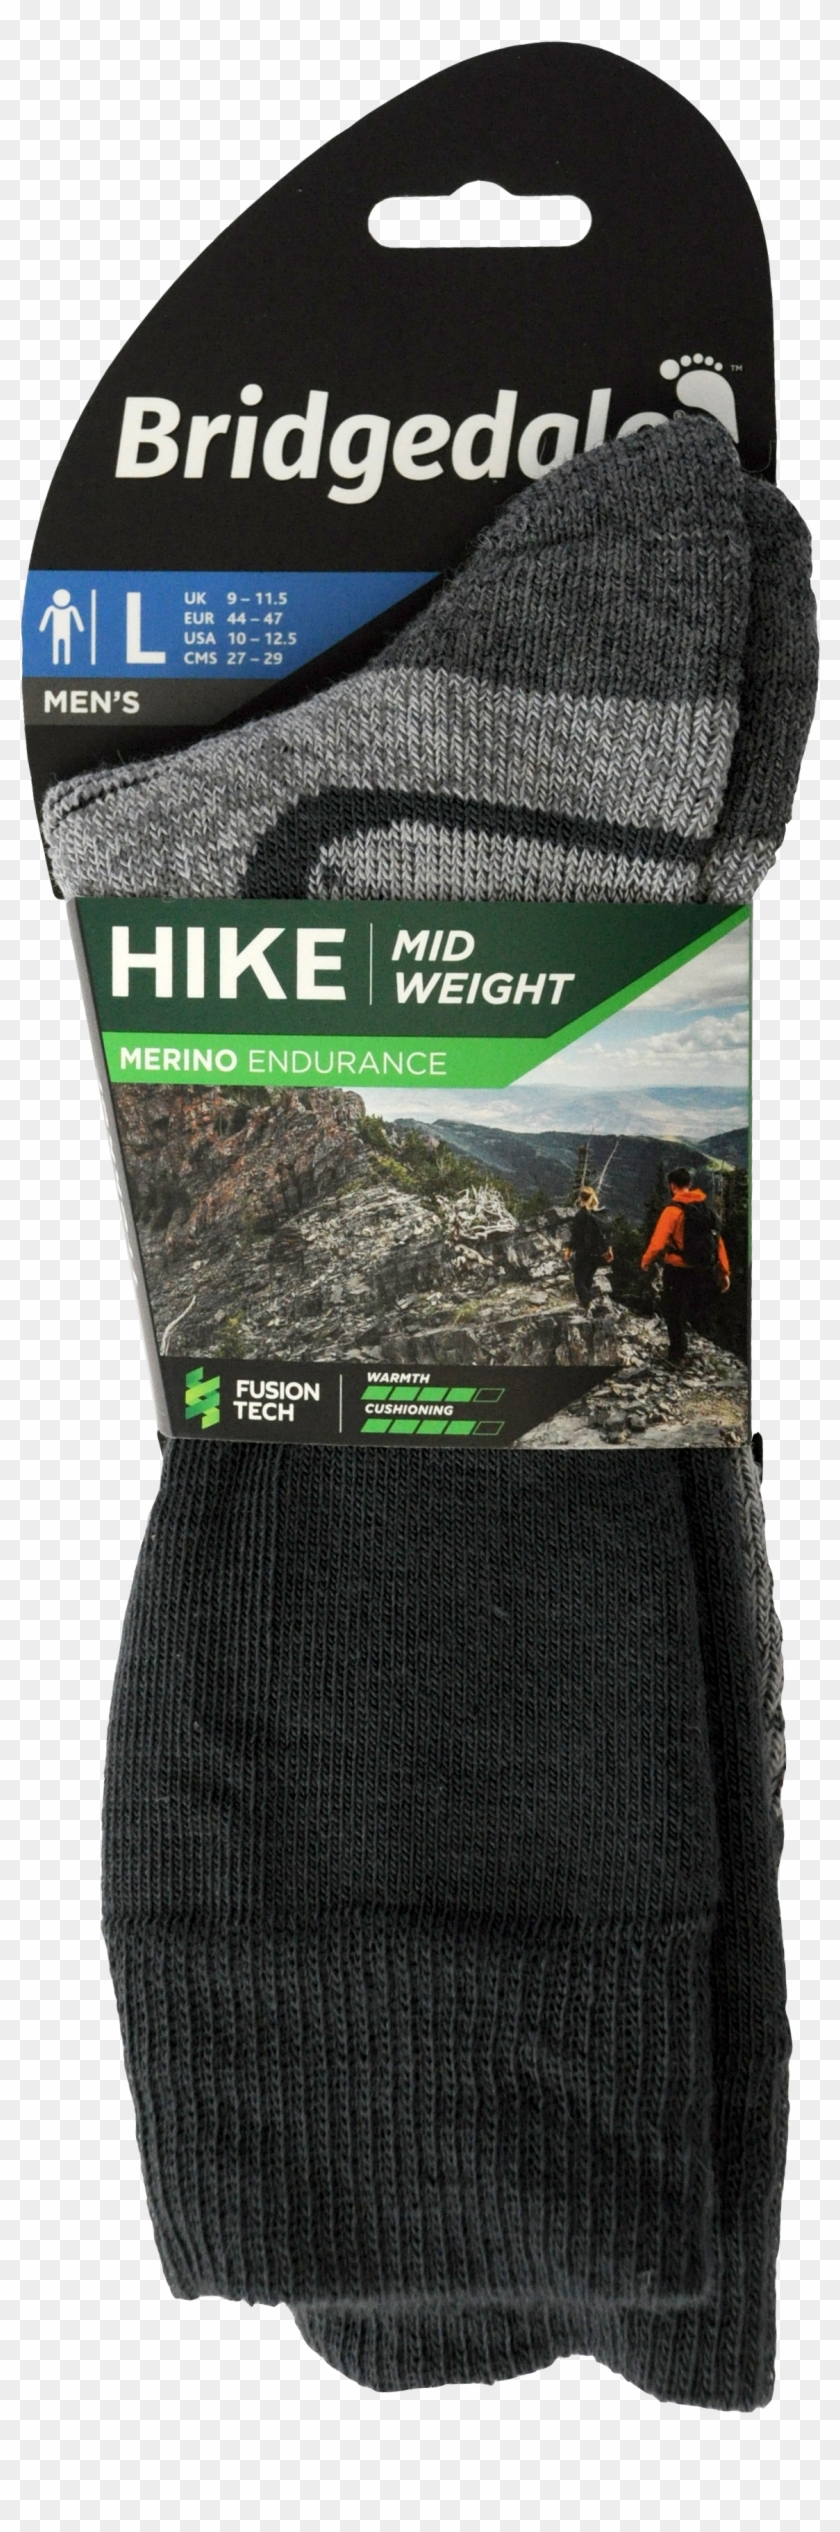 Hike Endurance Packaging - Sock Clipart #4565367